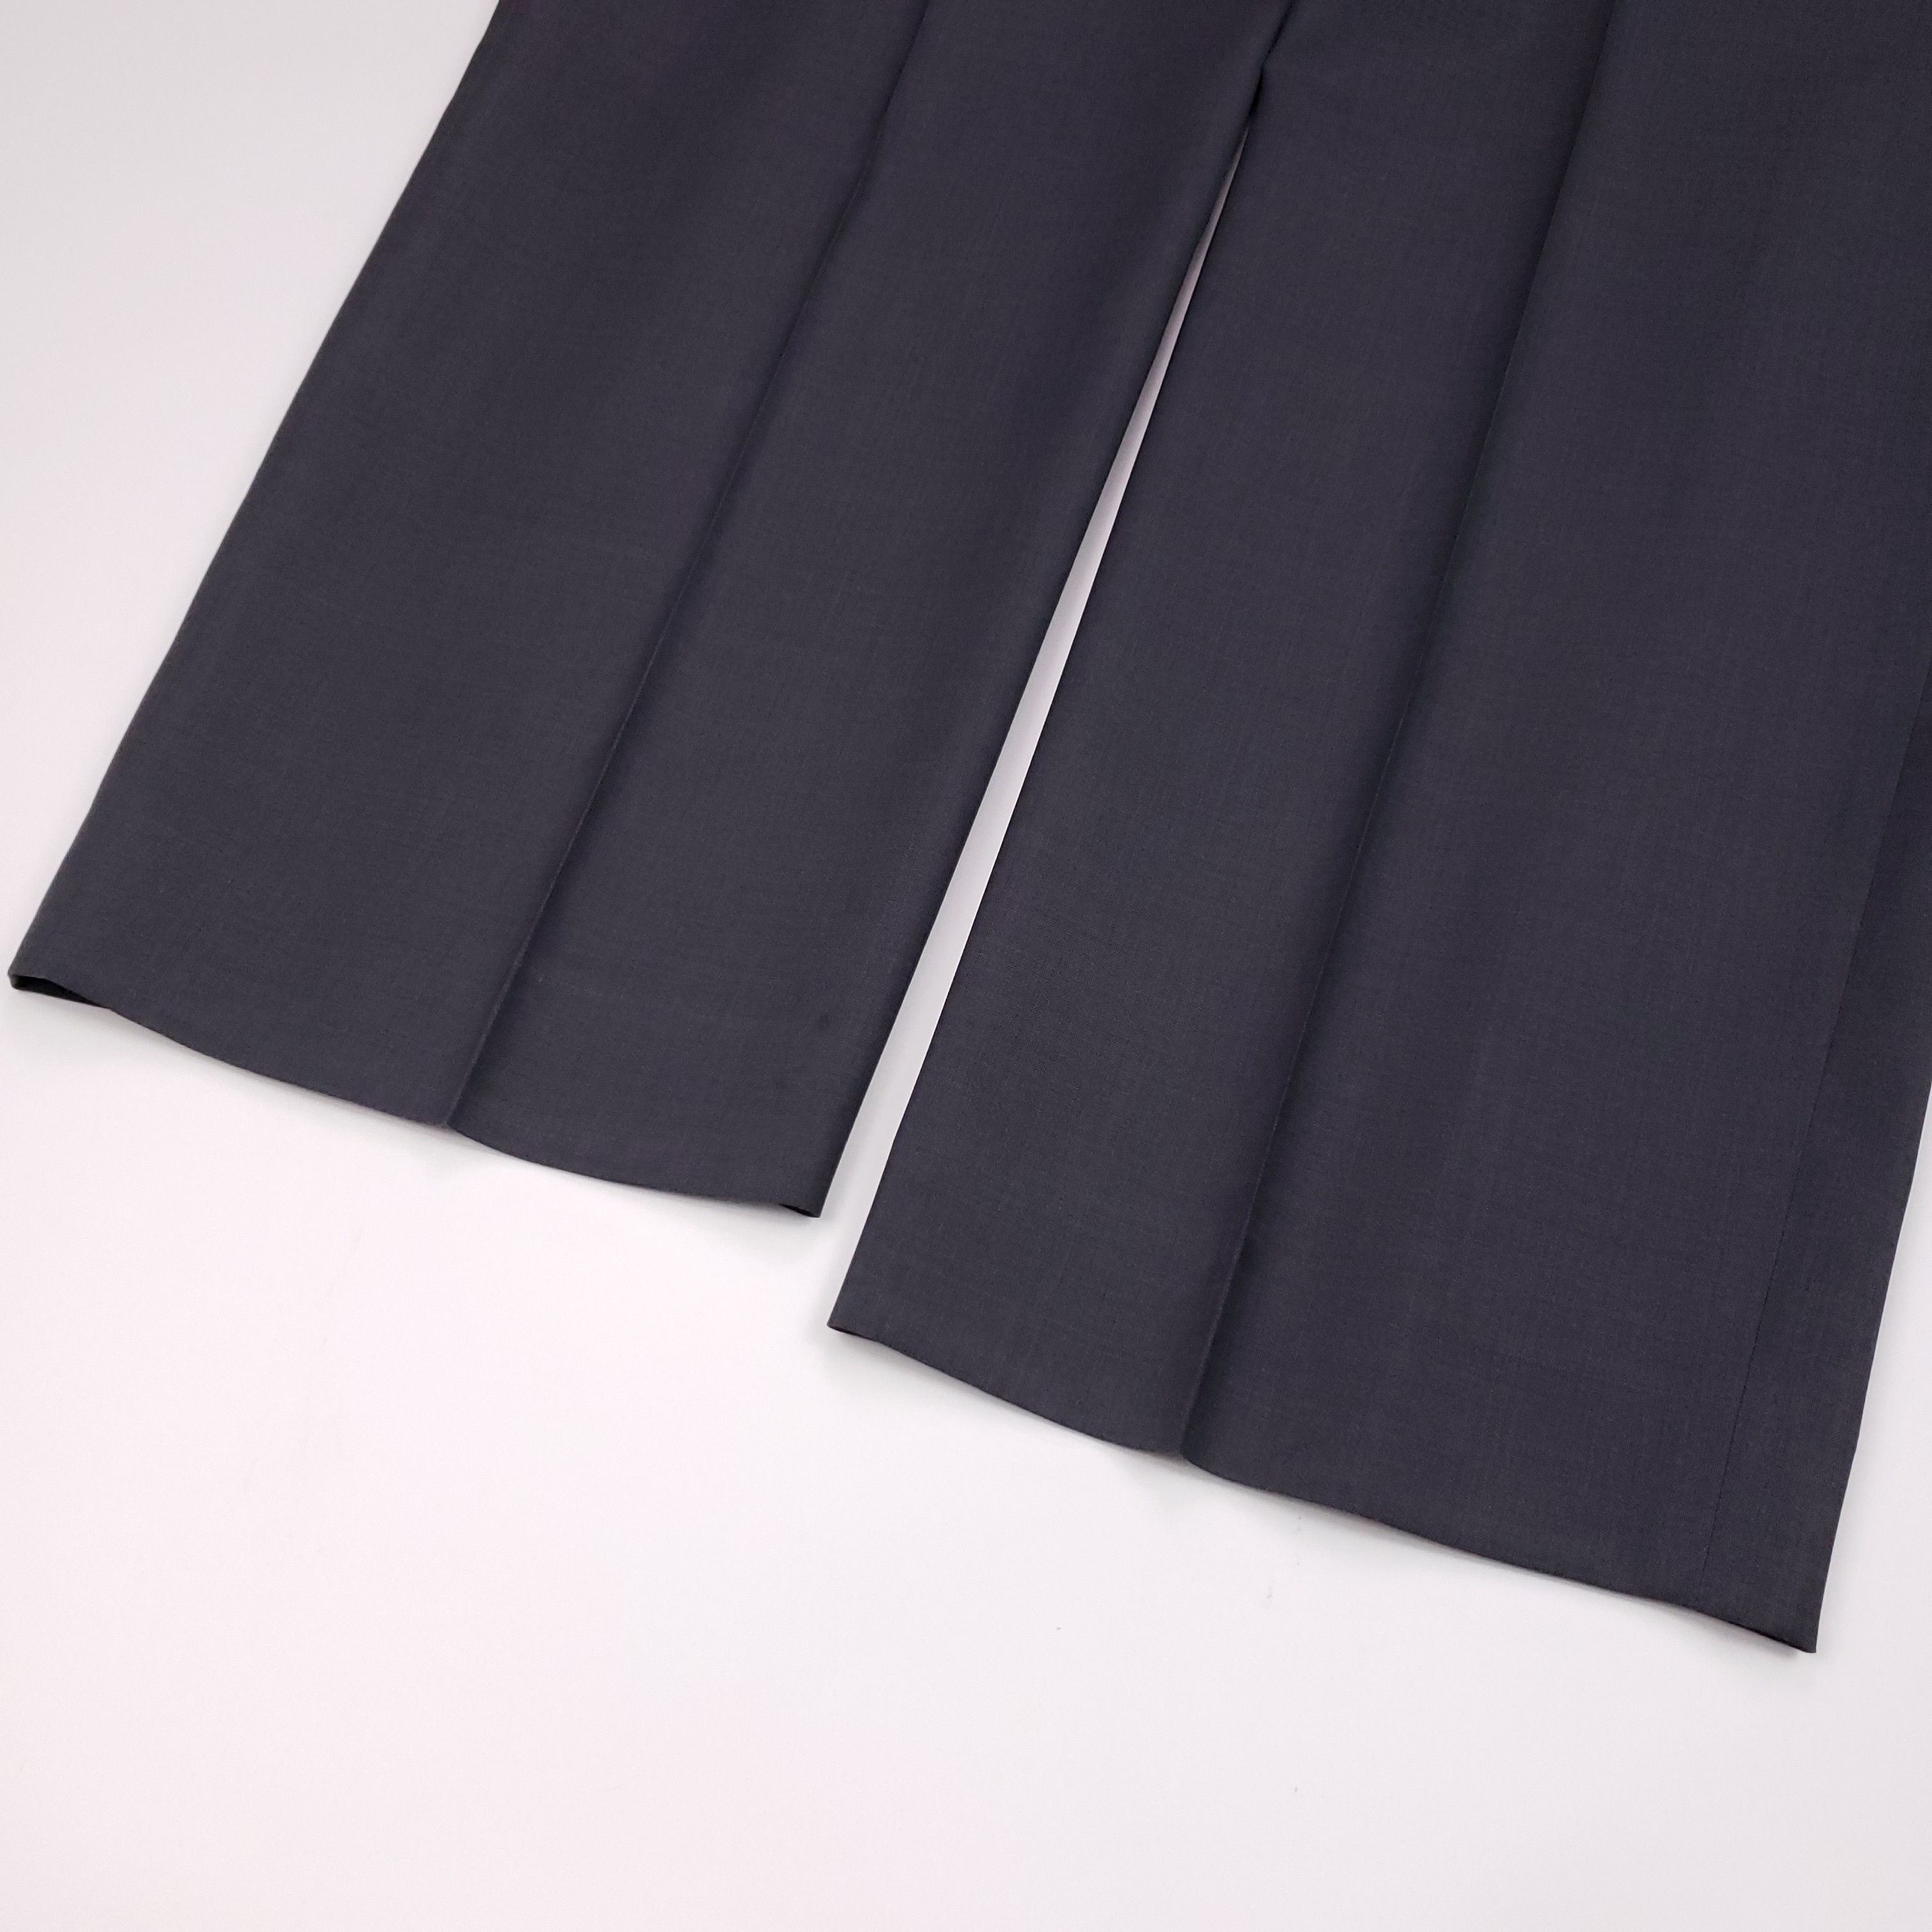 Hugo Boss Hugo Boss James Brown Pants 32x30 Gray Charcoal Wool Cashme Size US 32 / EU 48 - 12 Preview